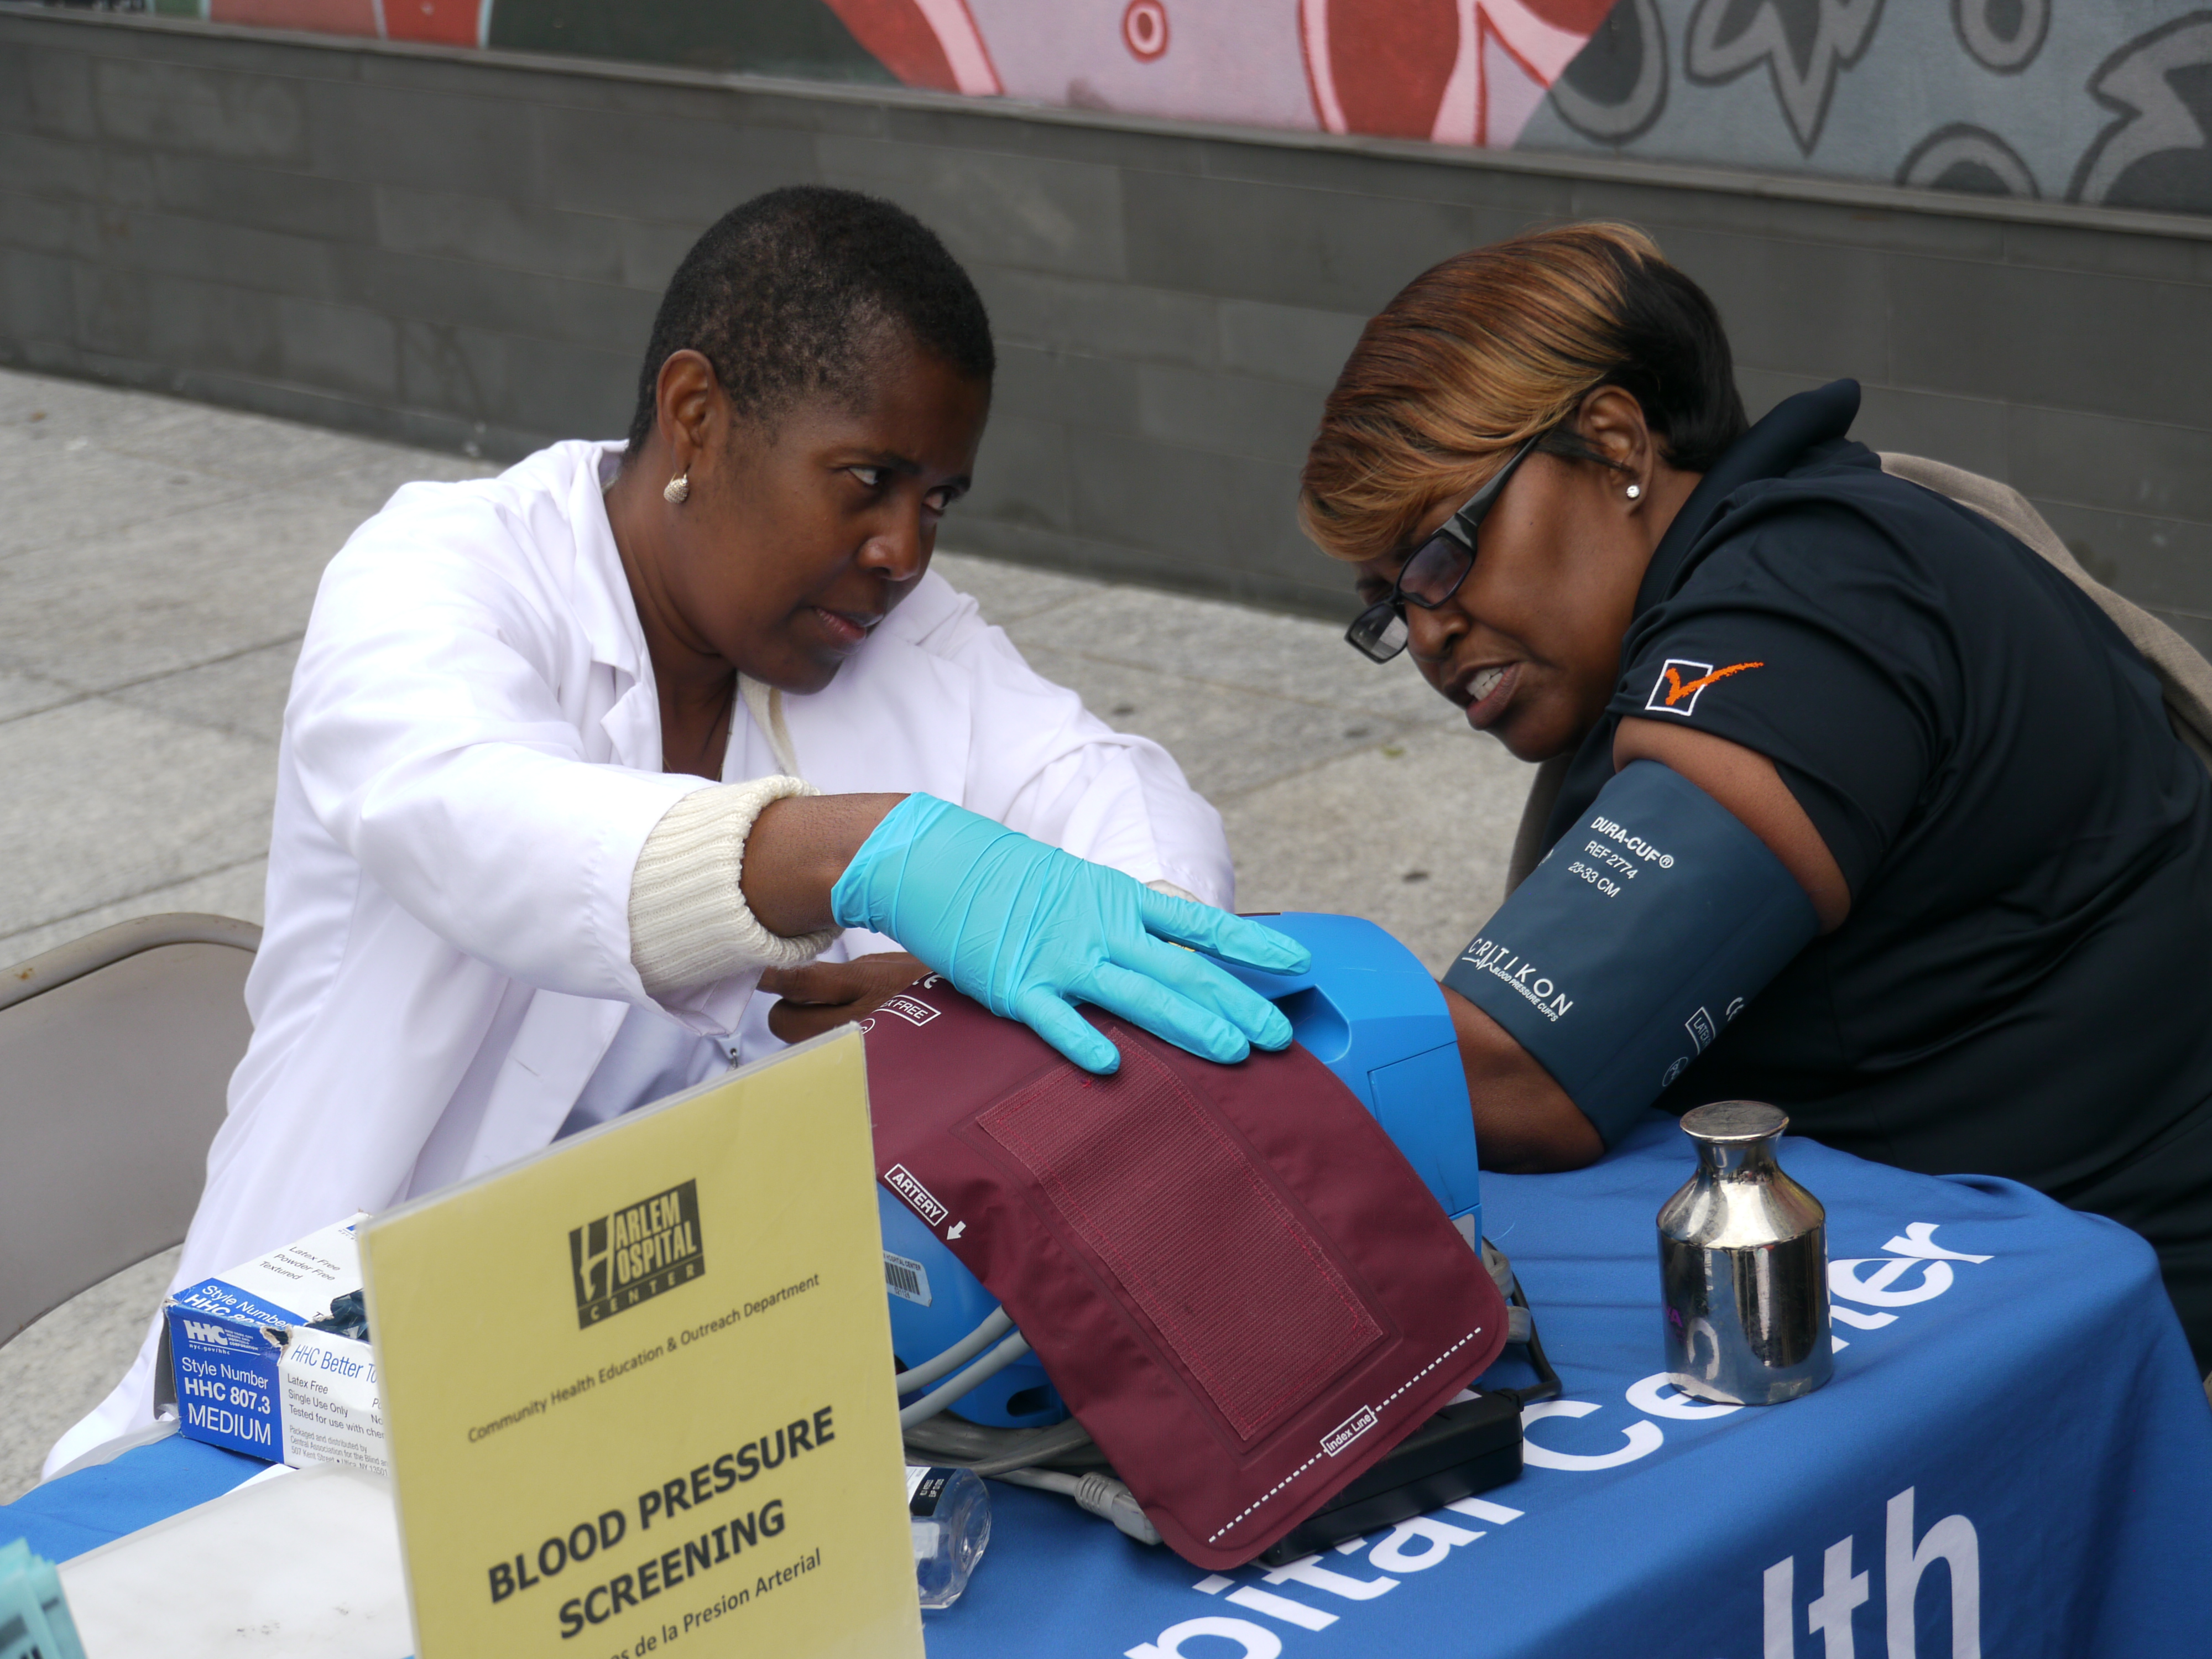 Harlem Hospital at Harlem Emergency Preparedness Day doing a blood pressure screening